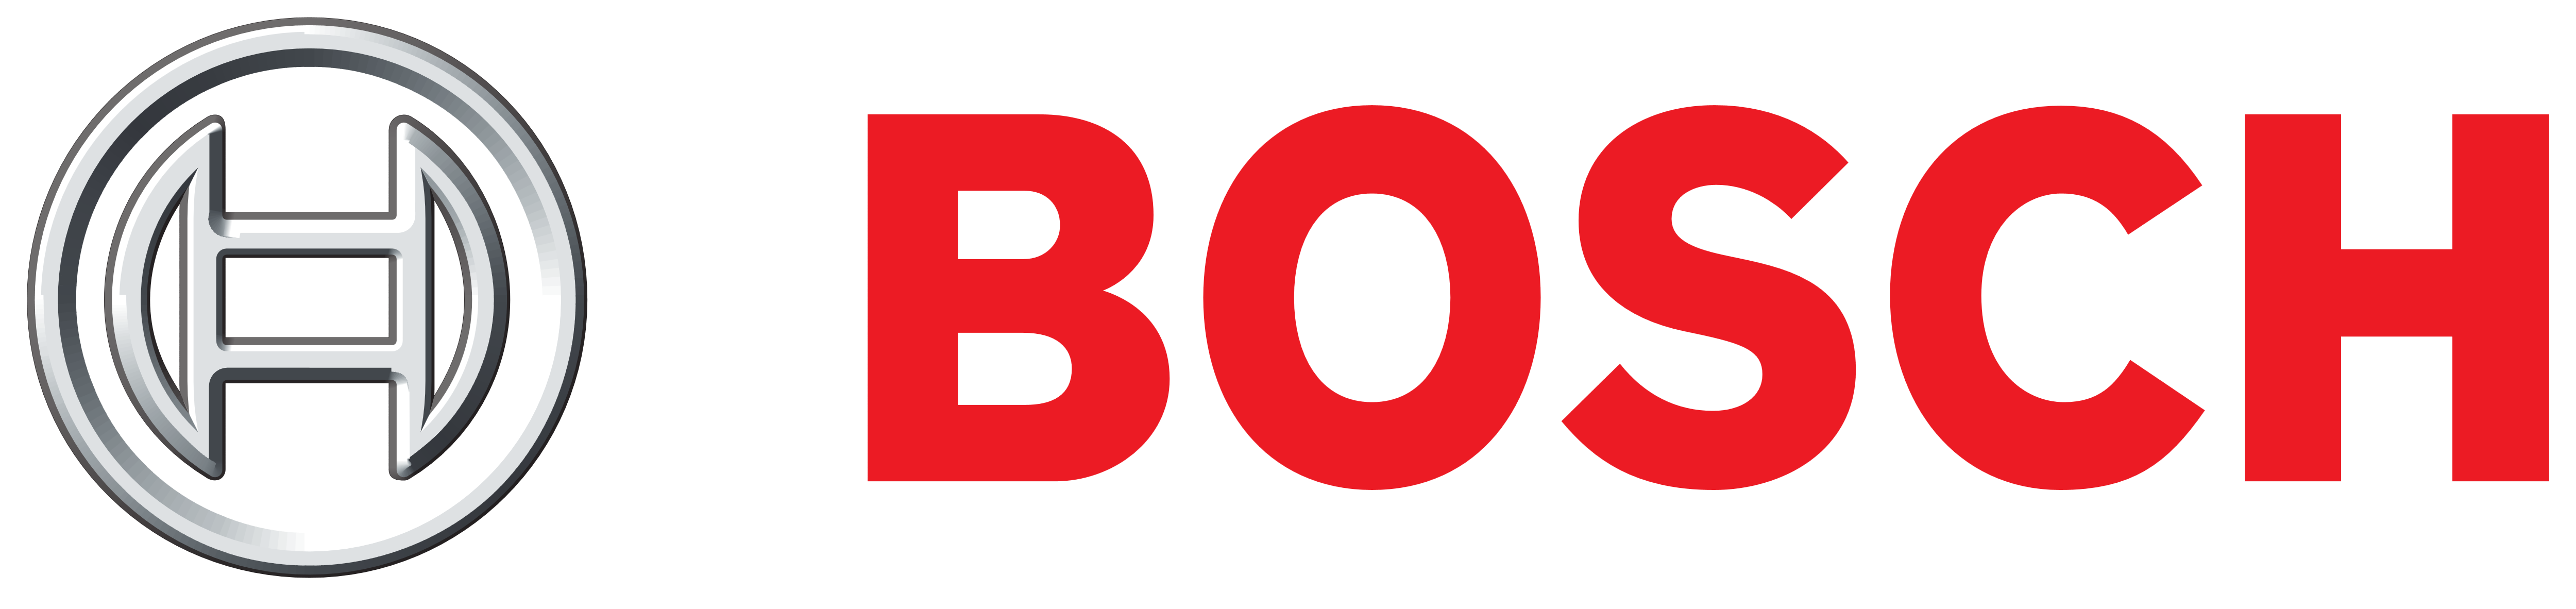 Bosch – Logos Download - Bosch, Transparent background PNG HD thumbnail